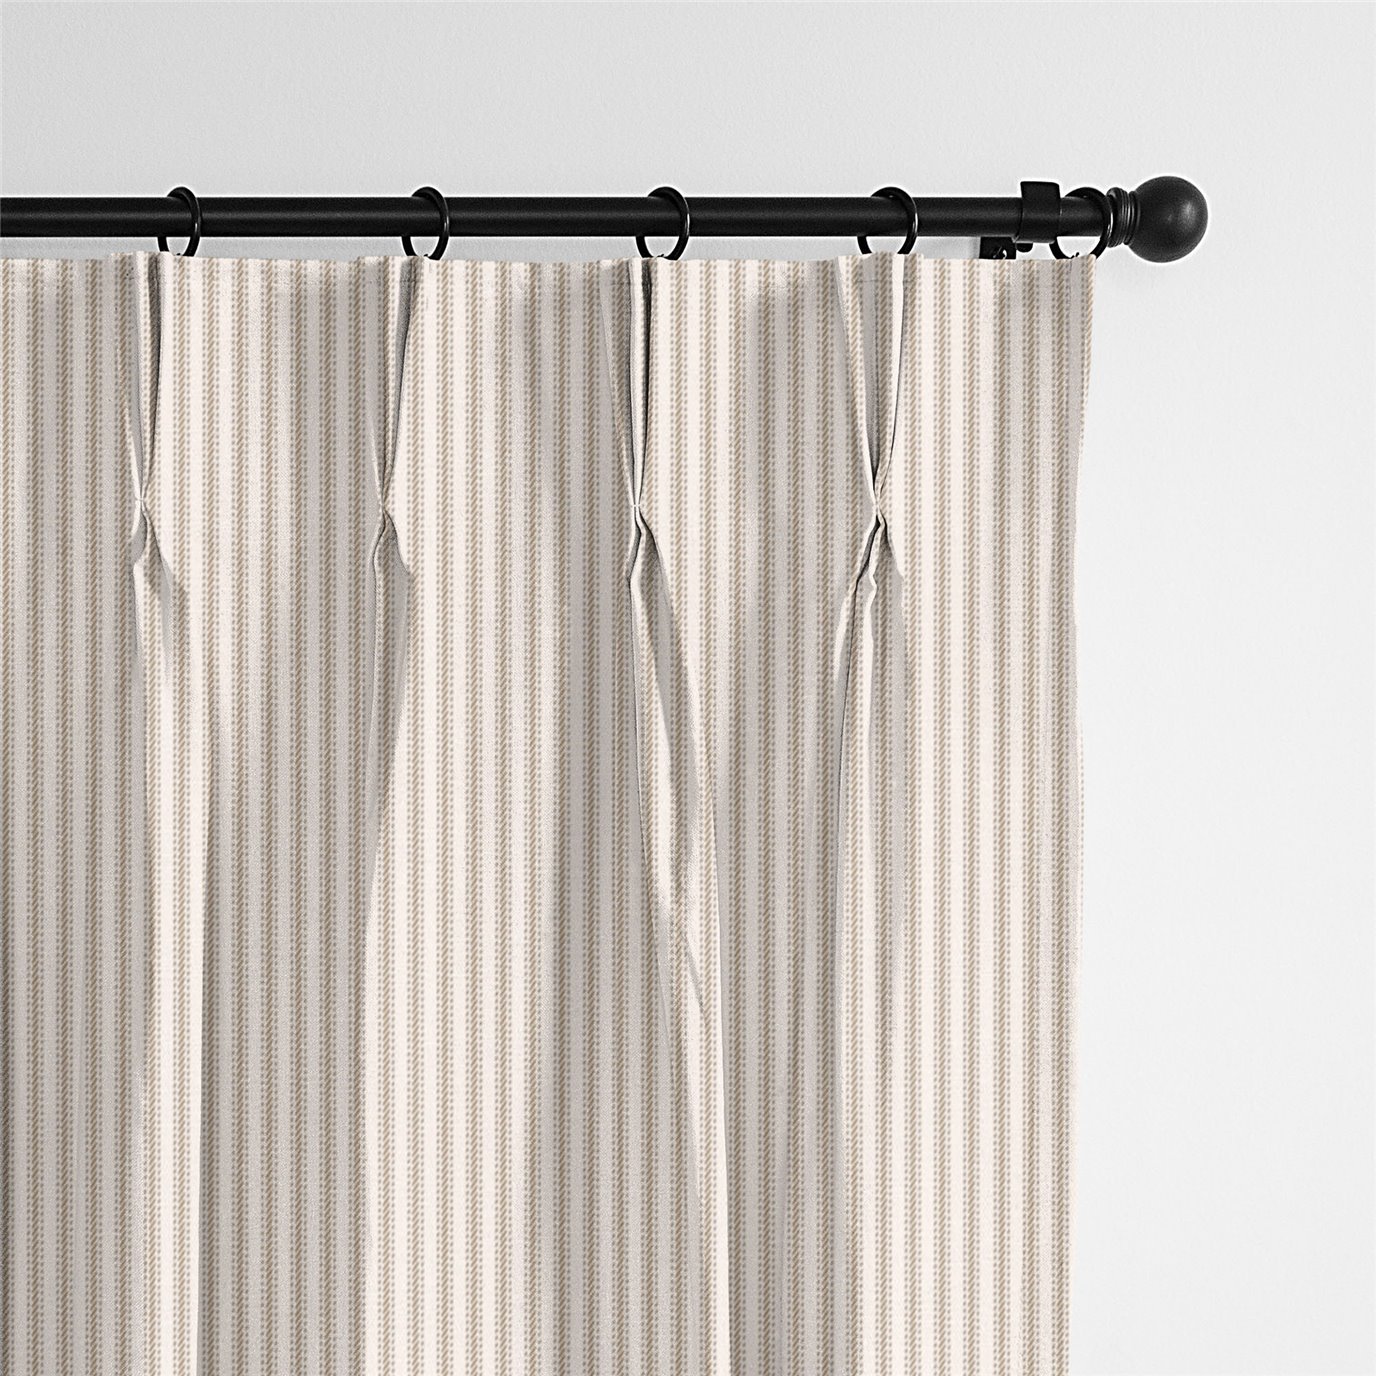 Cruz Ticking Stripes Taupe/Ivory Pinch Pleat Drapery Panel - Pair - Size 40"x144"